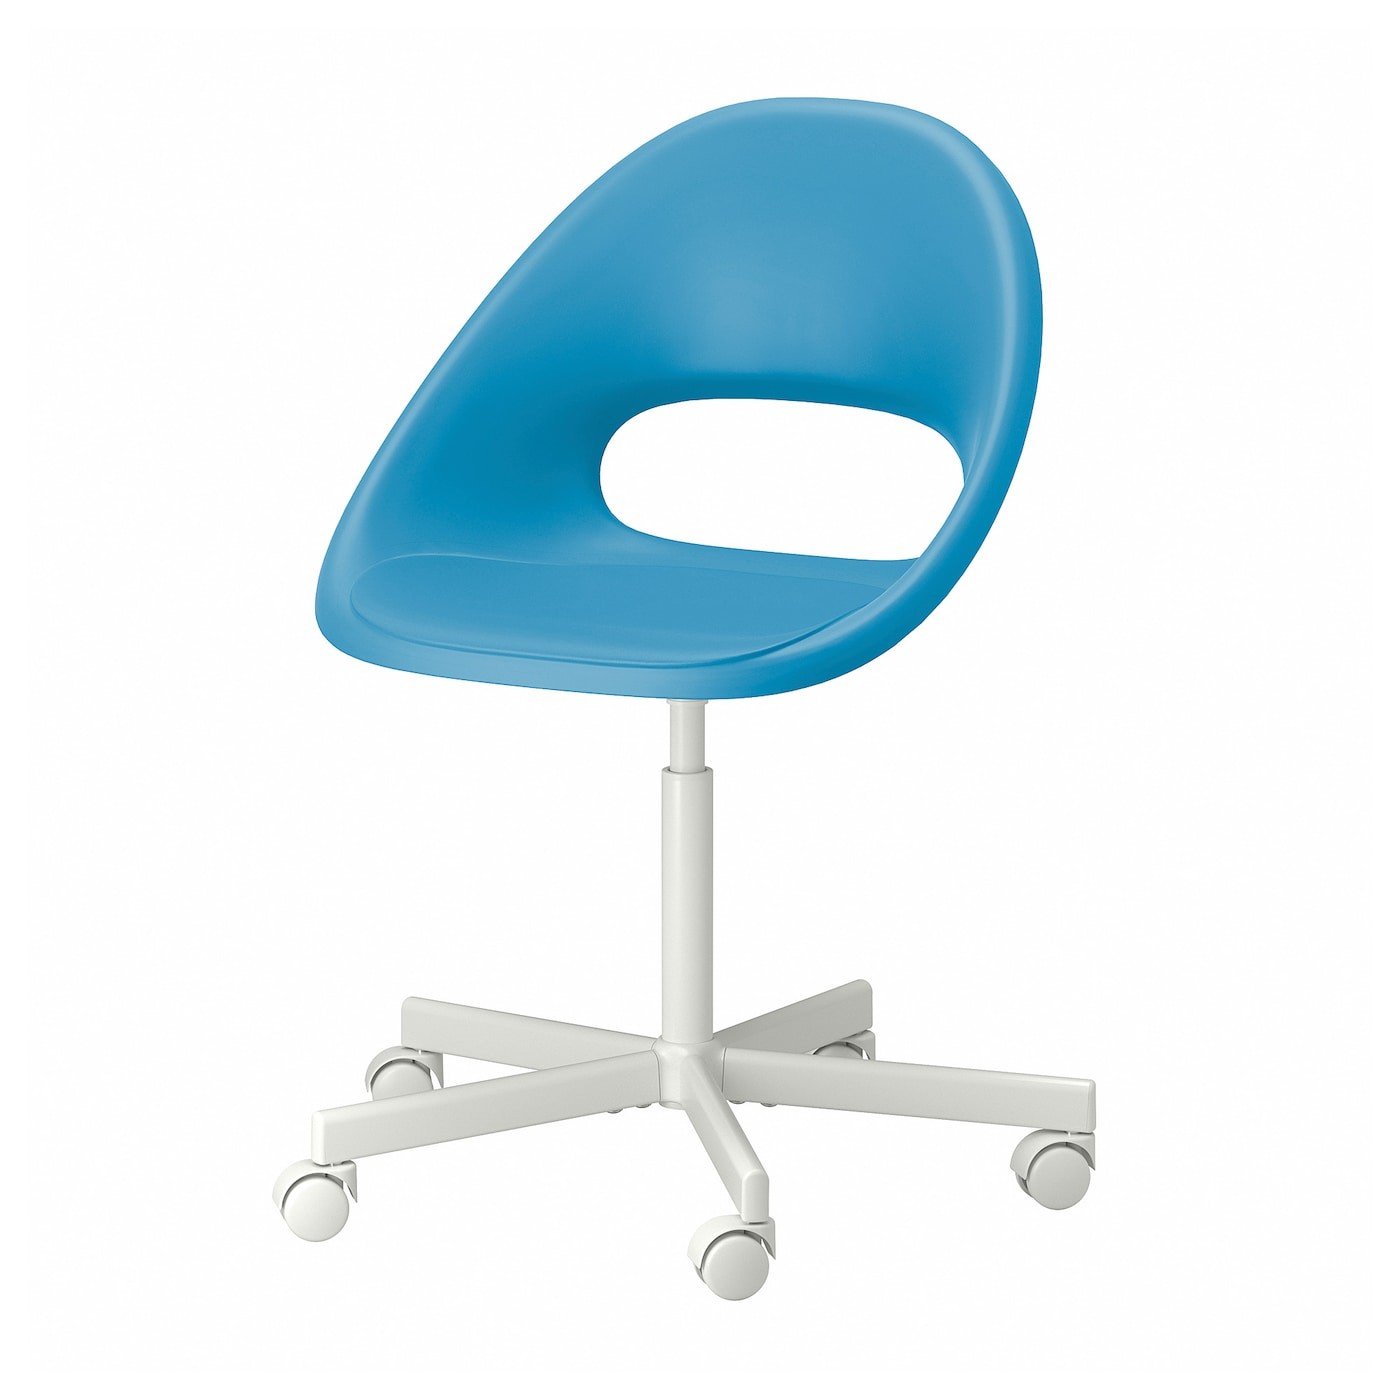 ELDBERGET / BLYSKÄR Swivel chair